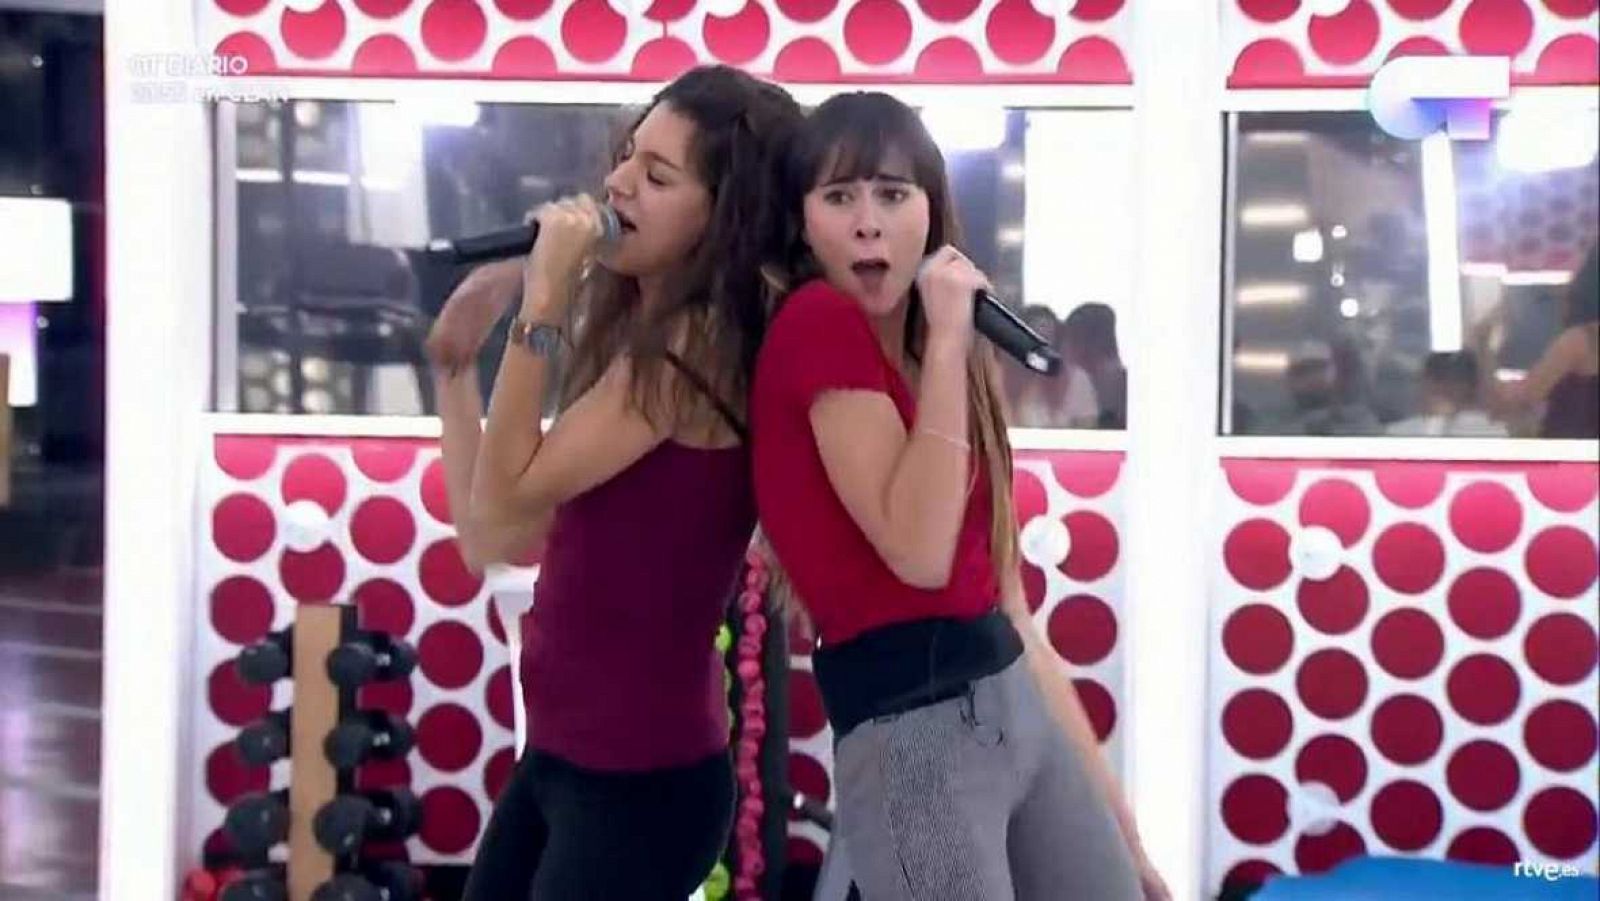 Eurovisión 2018 - Aitana y Ana Guerra cantan "Lo malo". 60 segundos de la versión definitiva